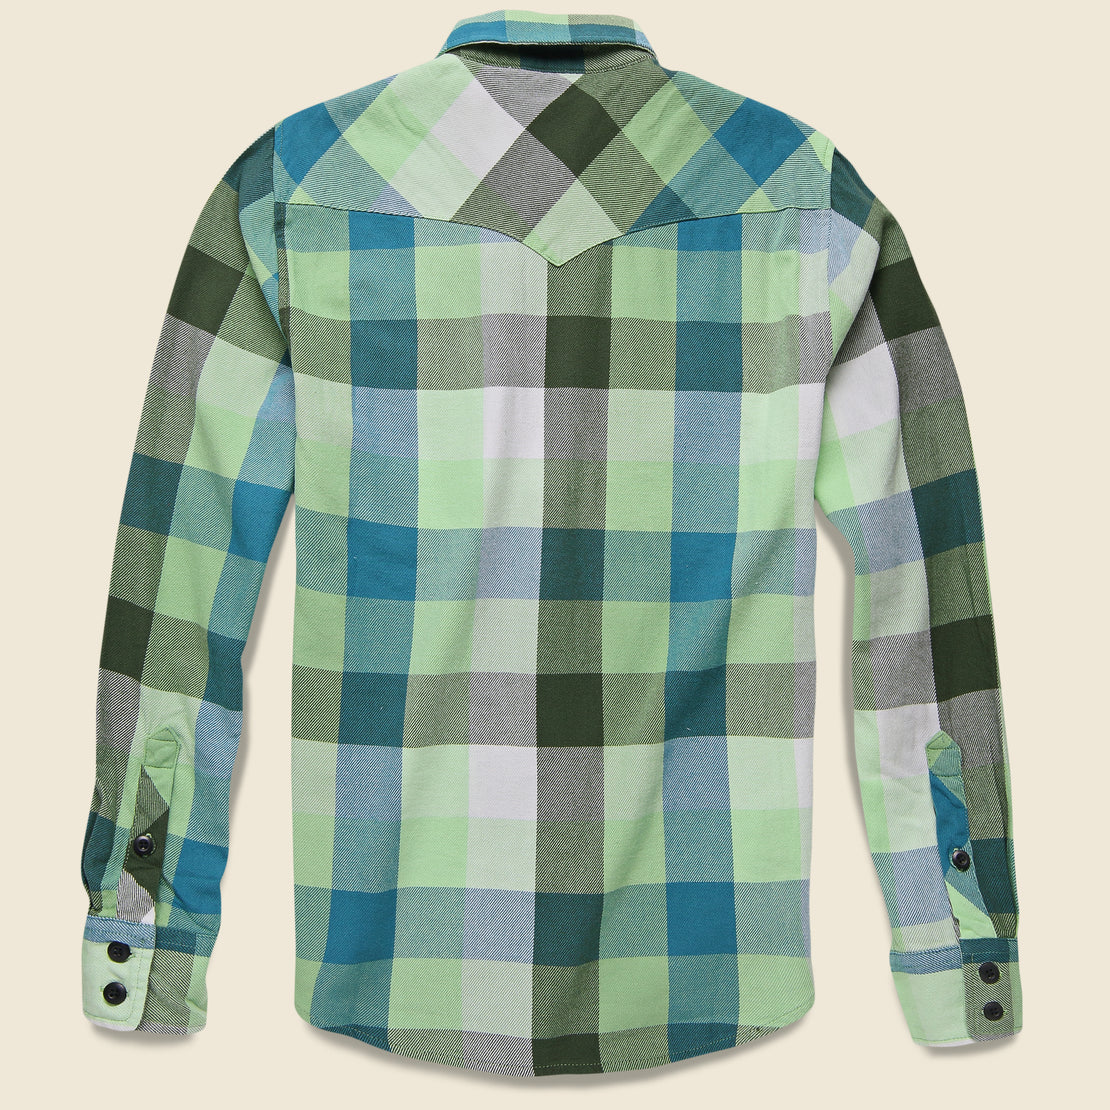 Plaid Mountain Shirt - Green Big Plaid - Topo Designs - STAG Provisions - Tops - L/S Woven - Plaid